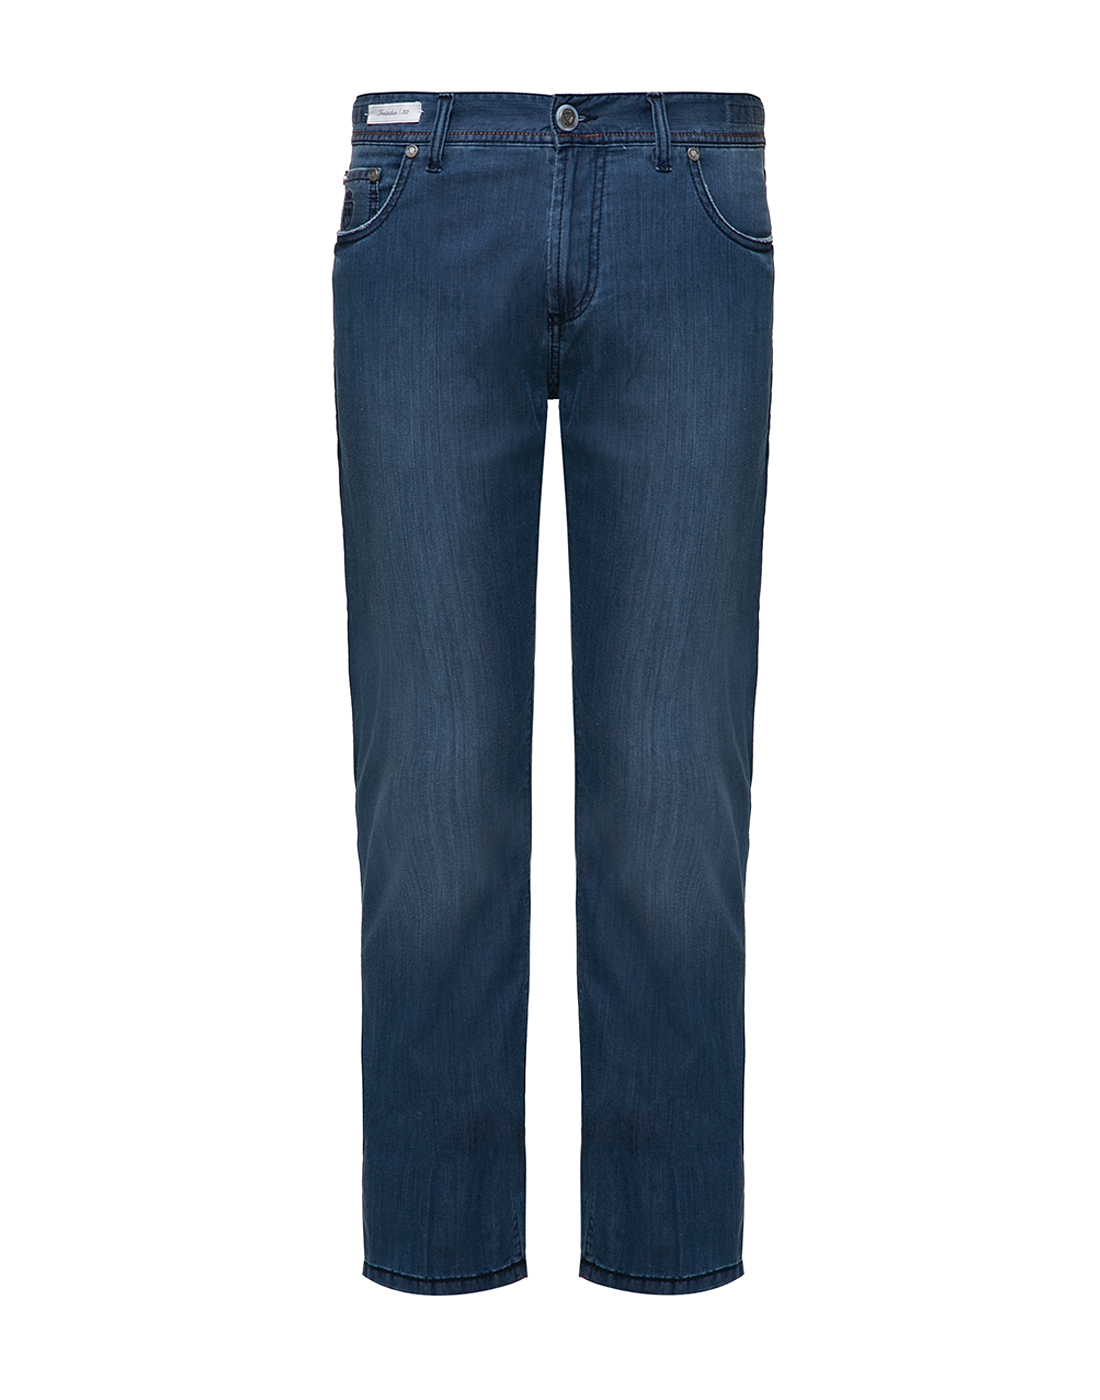 Мужские синие джинсы Tokyo Richard J. Brown ST84.W249-1